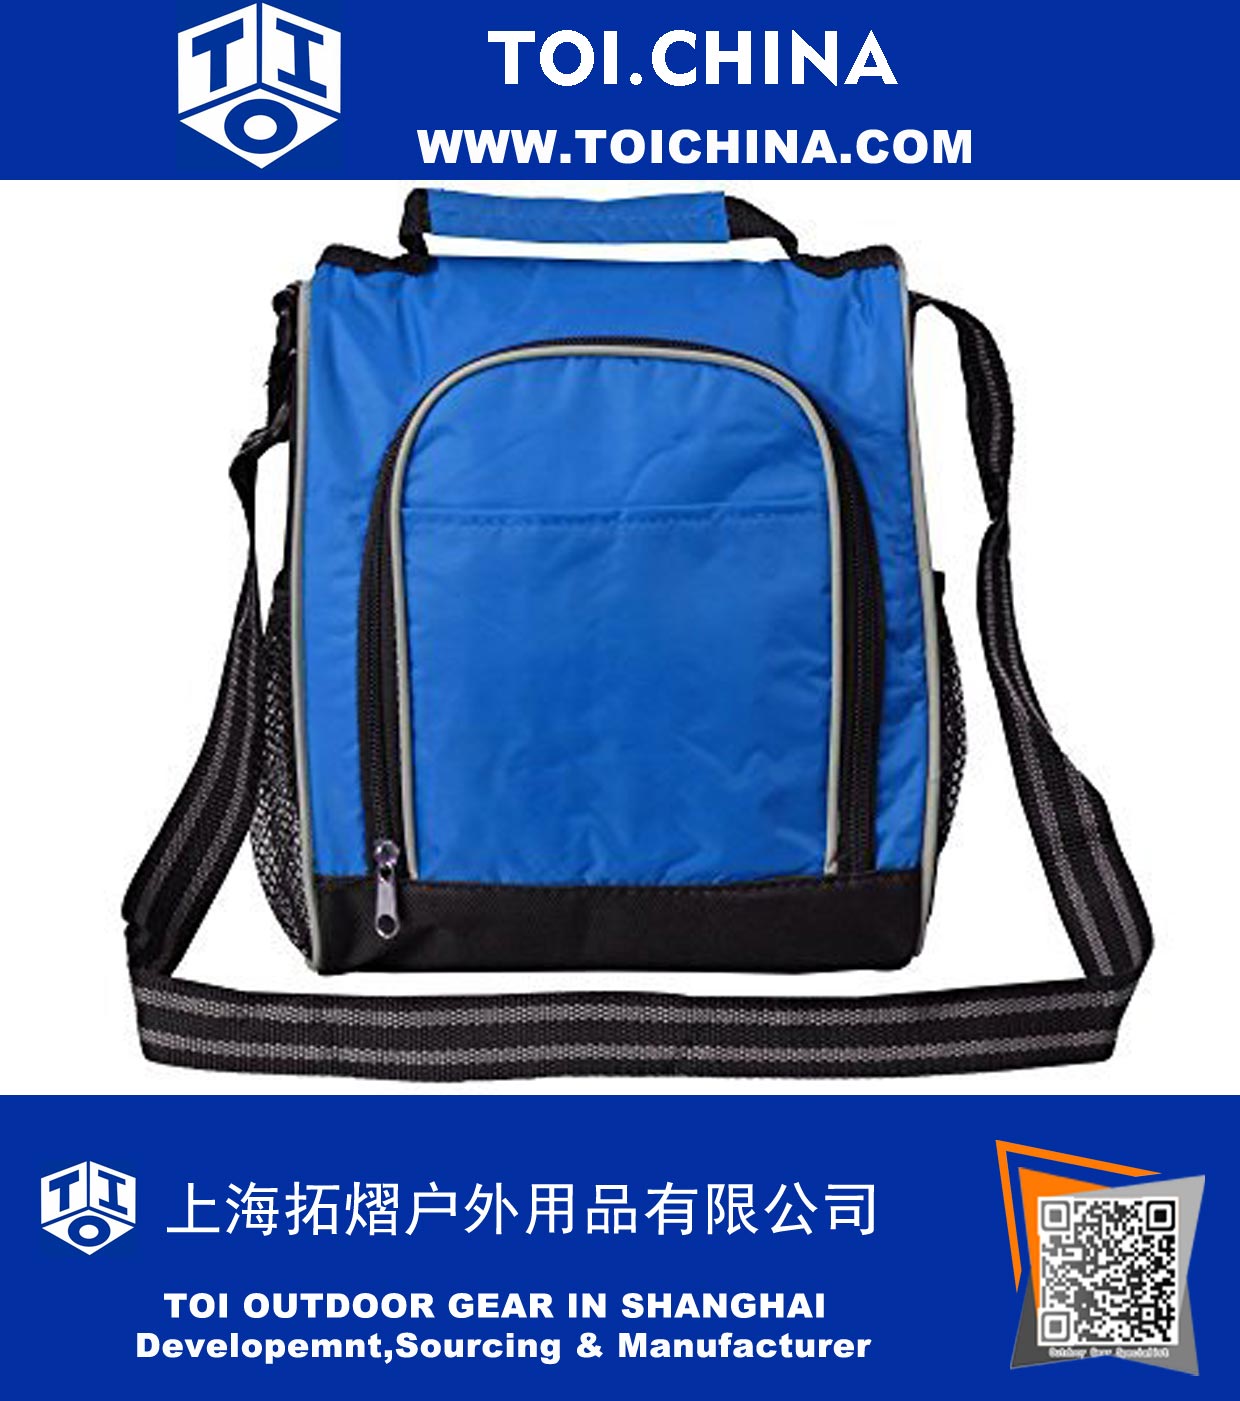 Lunch boxes For Kids Shoulder Strap Blue Reusable Bags for Boys Girls